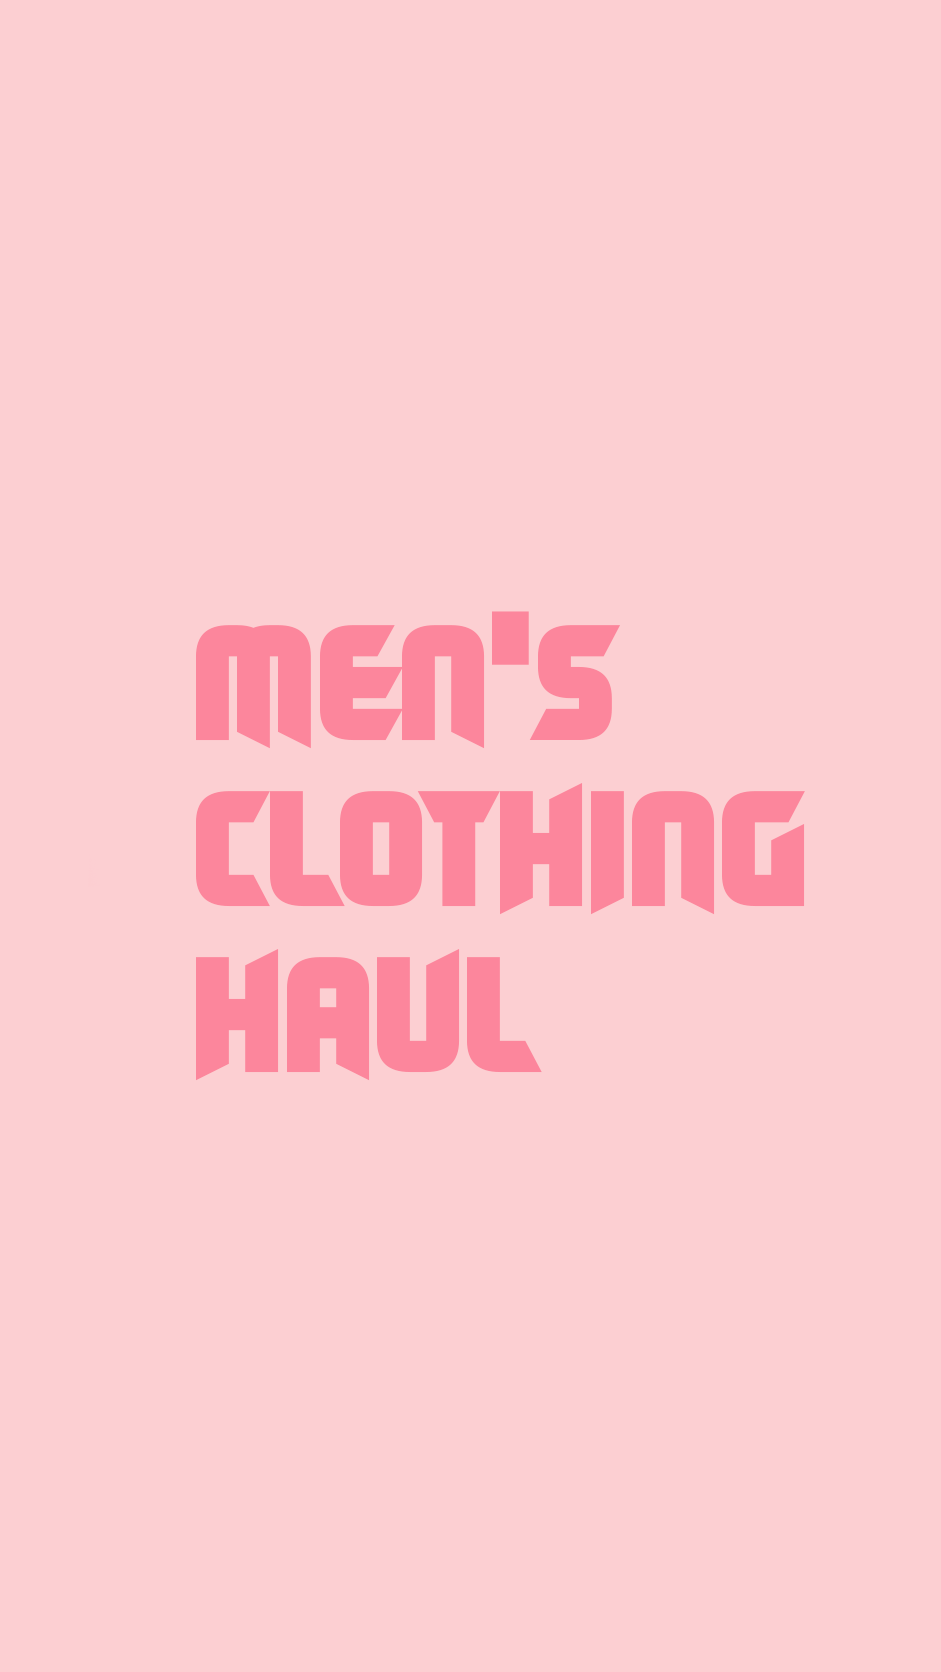 Men’s Clothing Haul